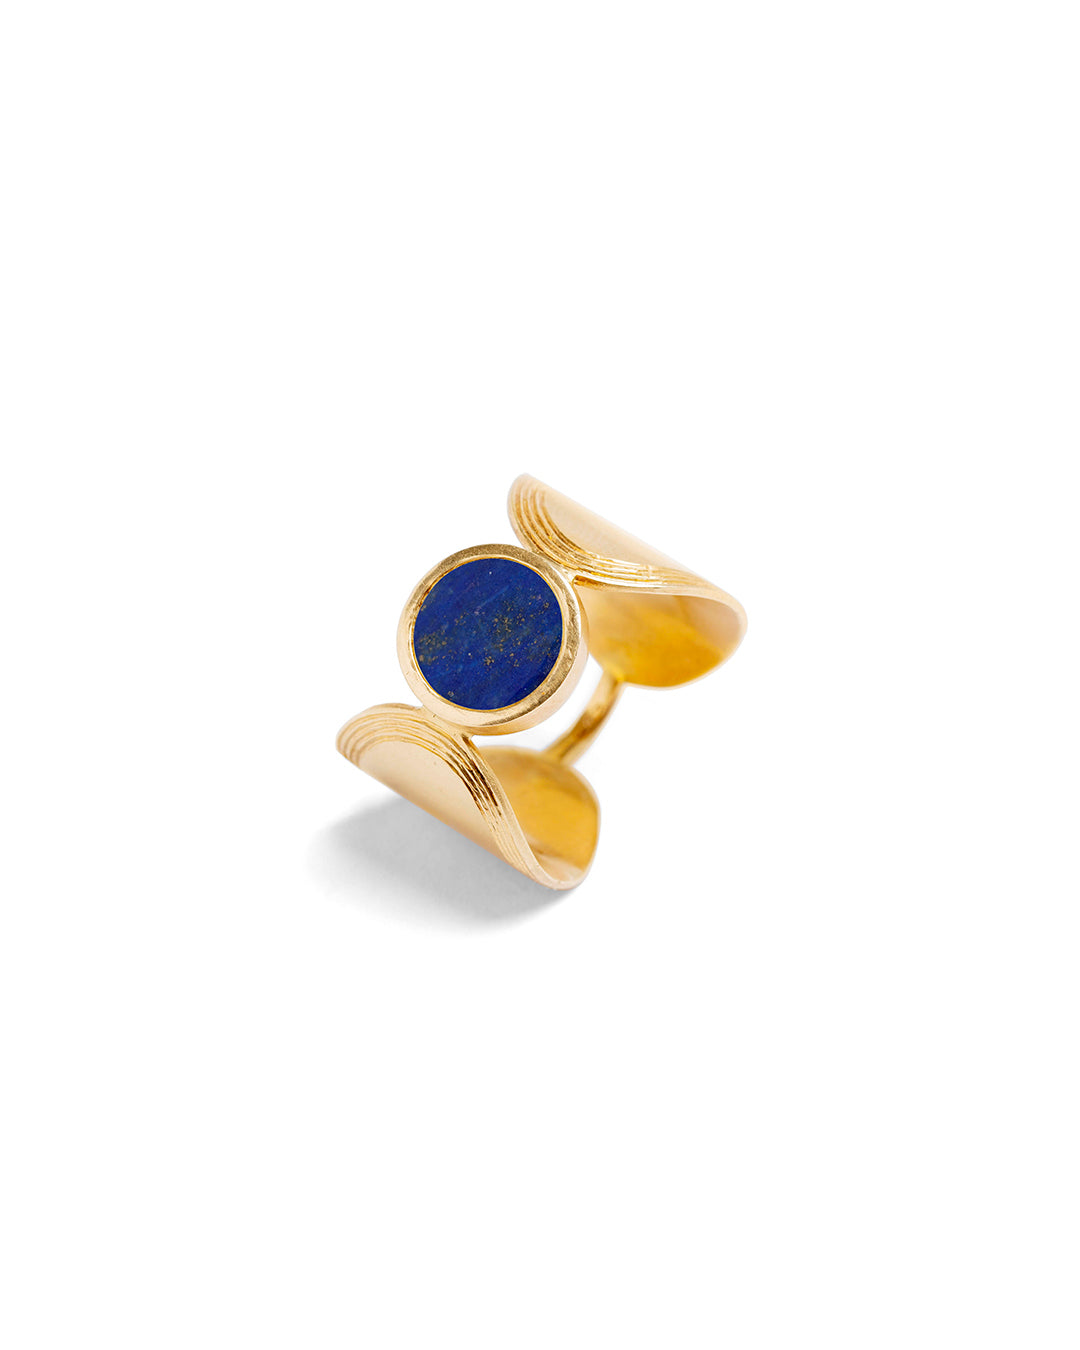 Maitea Handmade ring with blue gemstone